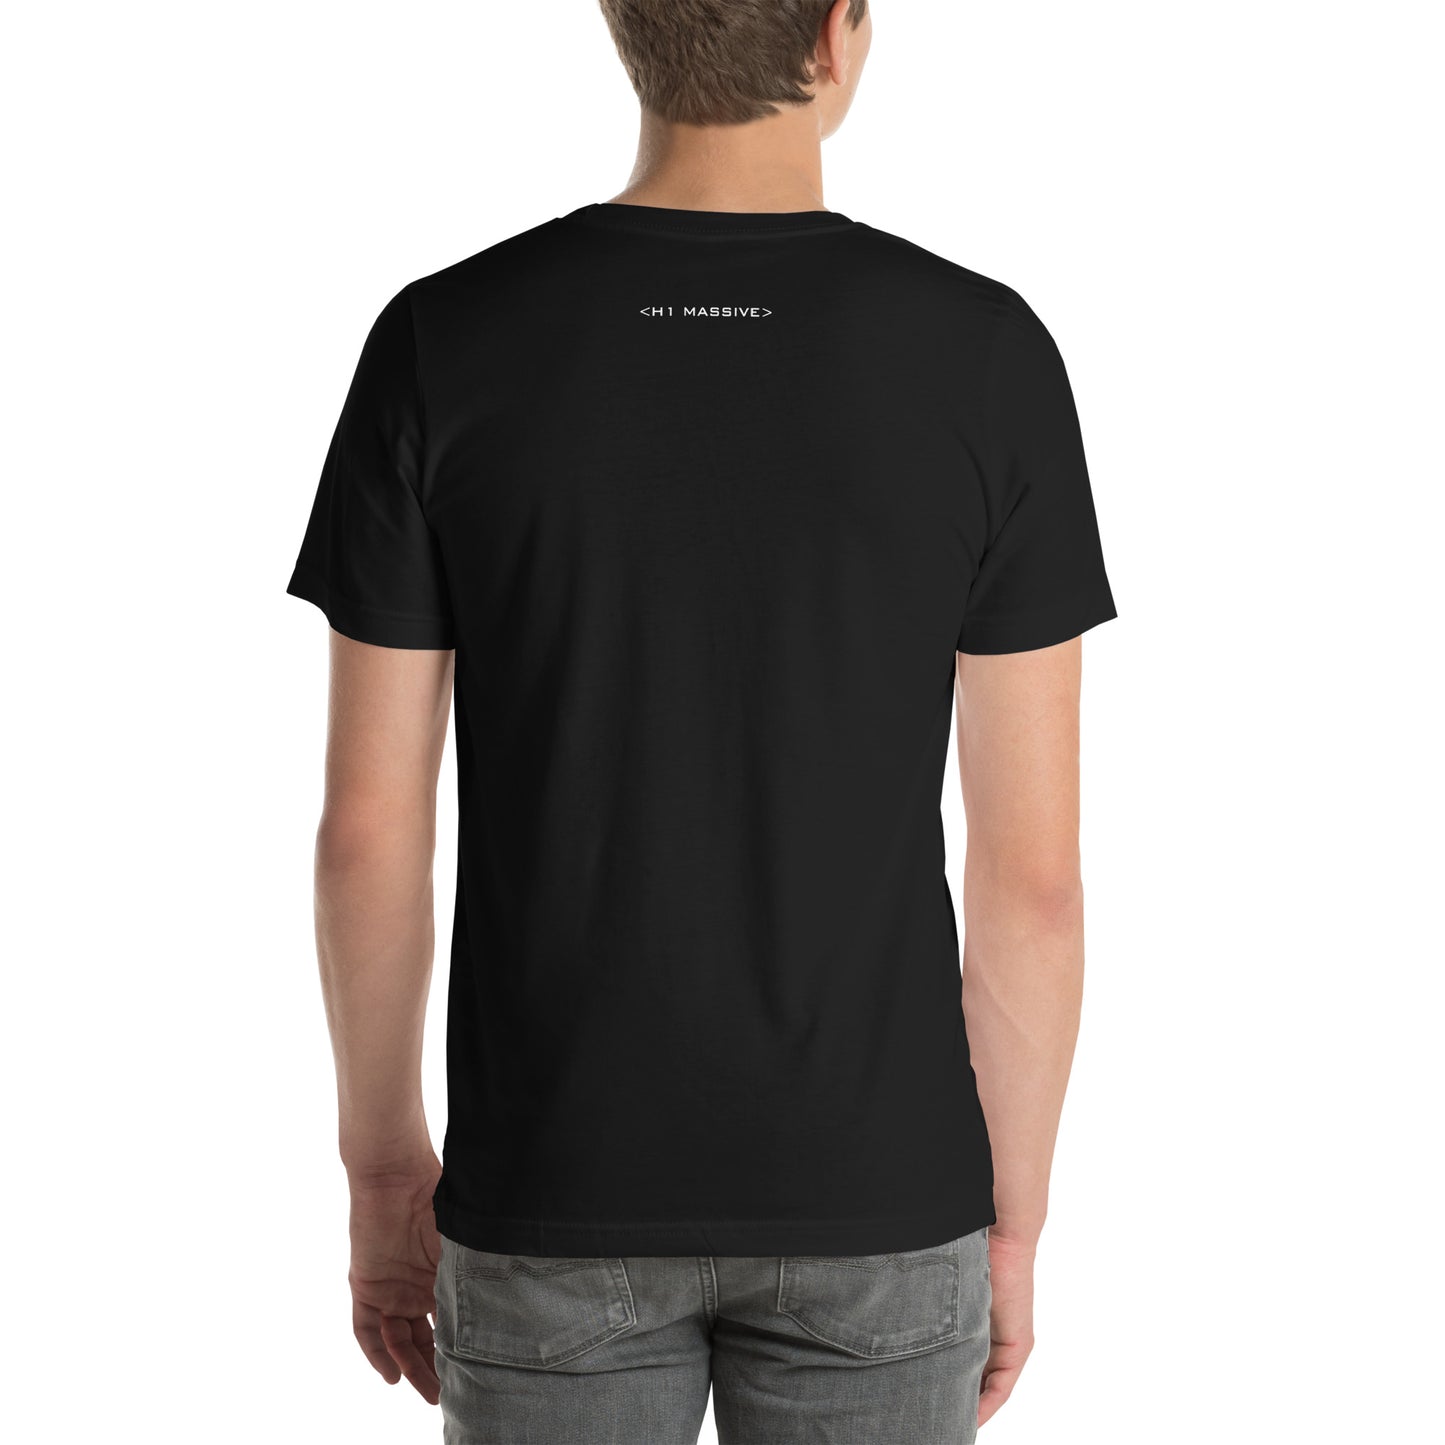 CARV.R - Unisex t-shirt - Deflect (After Death RMX)